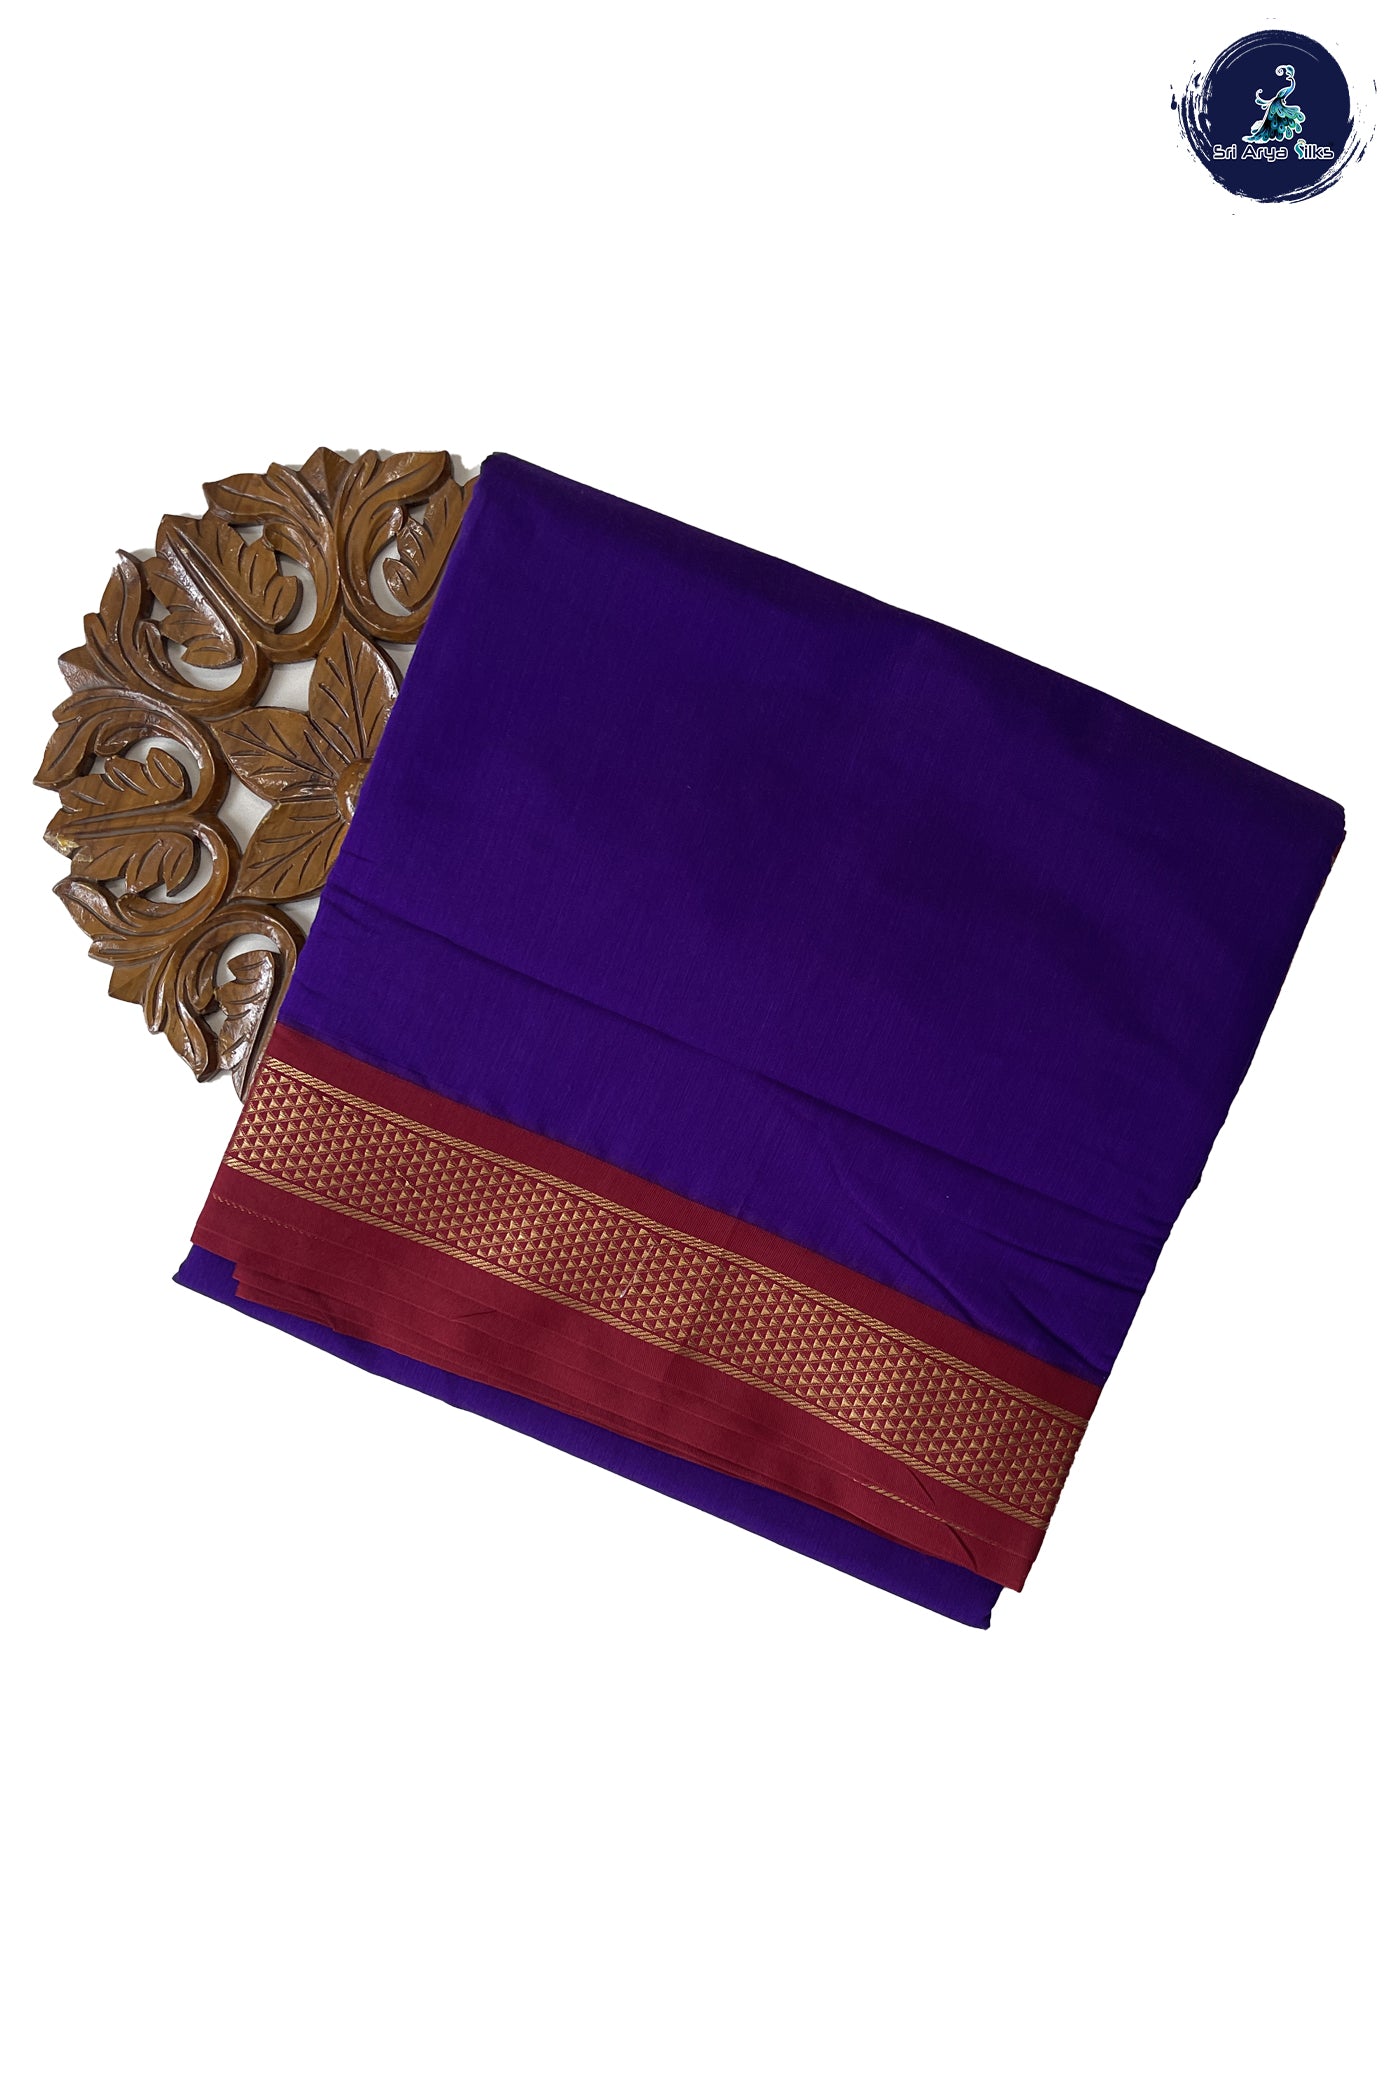 Dual Tone Violet Madisar Semi Silk Cotton Saree With Plain Pattern